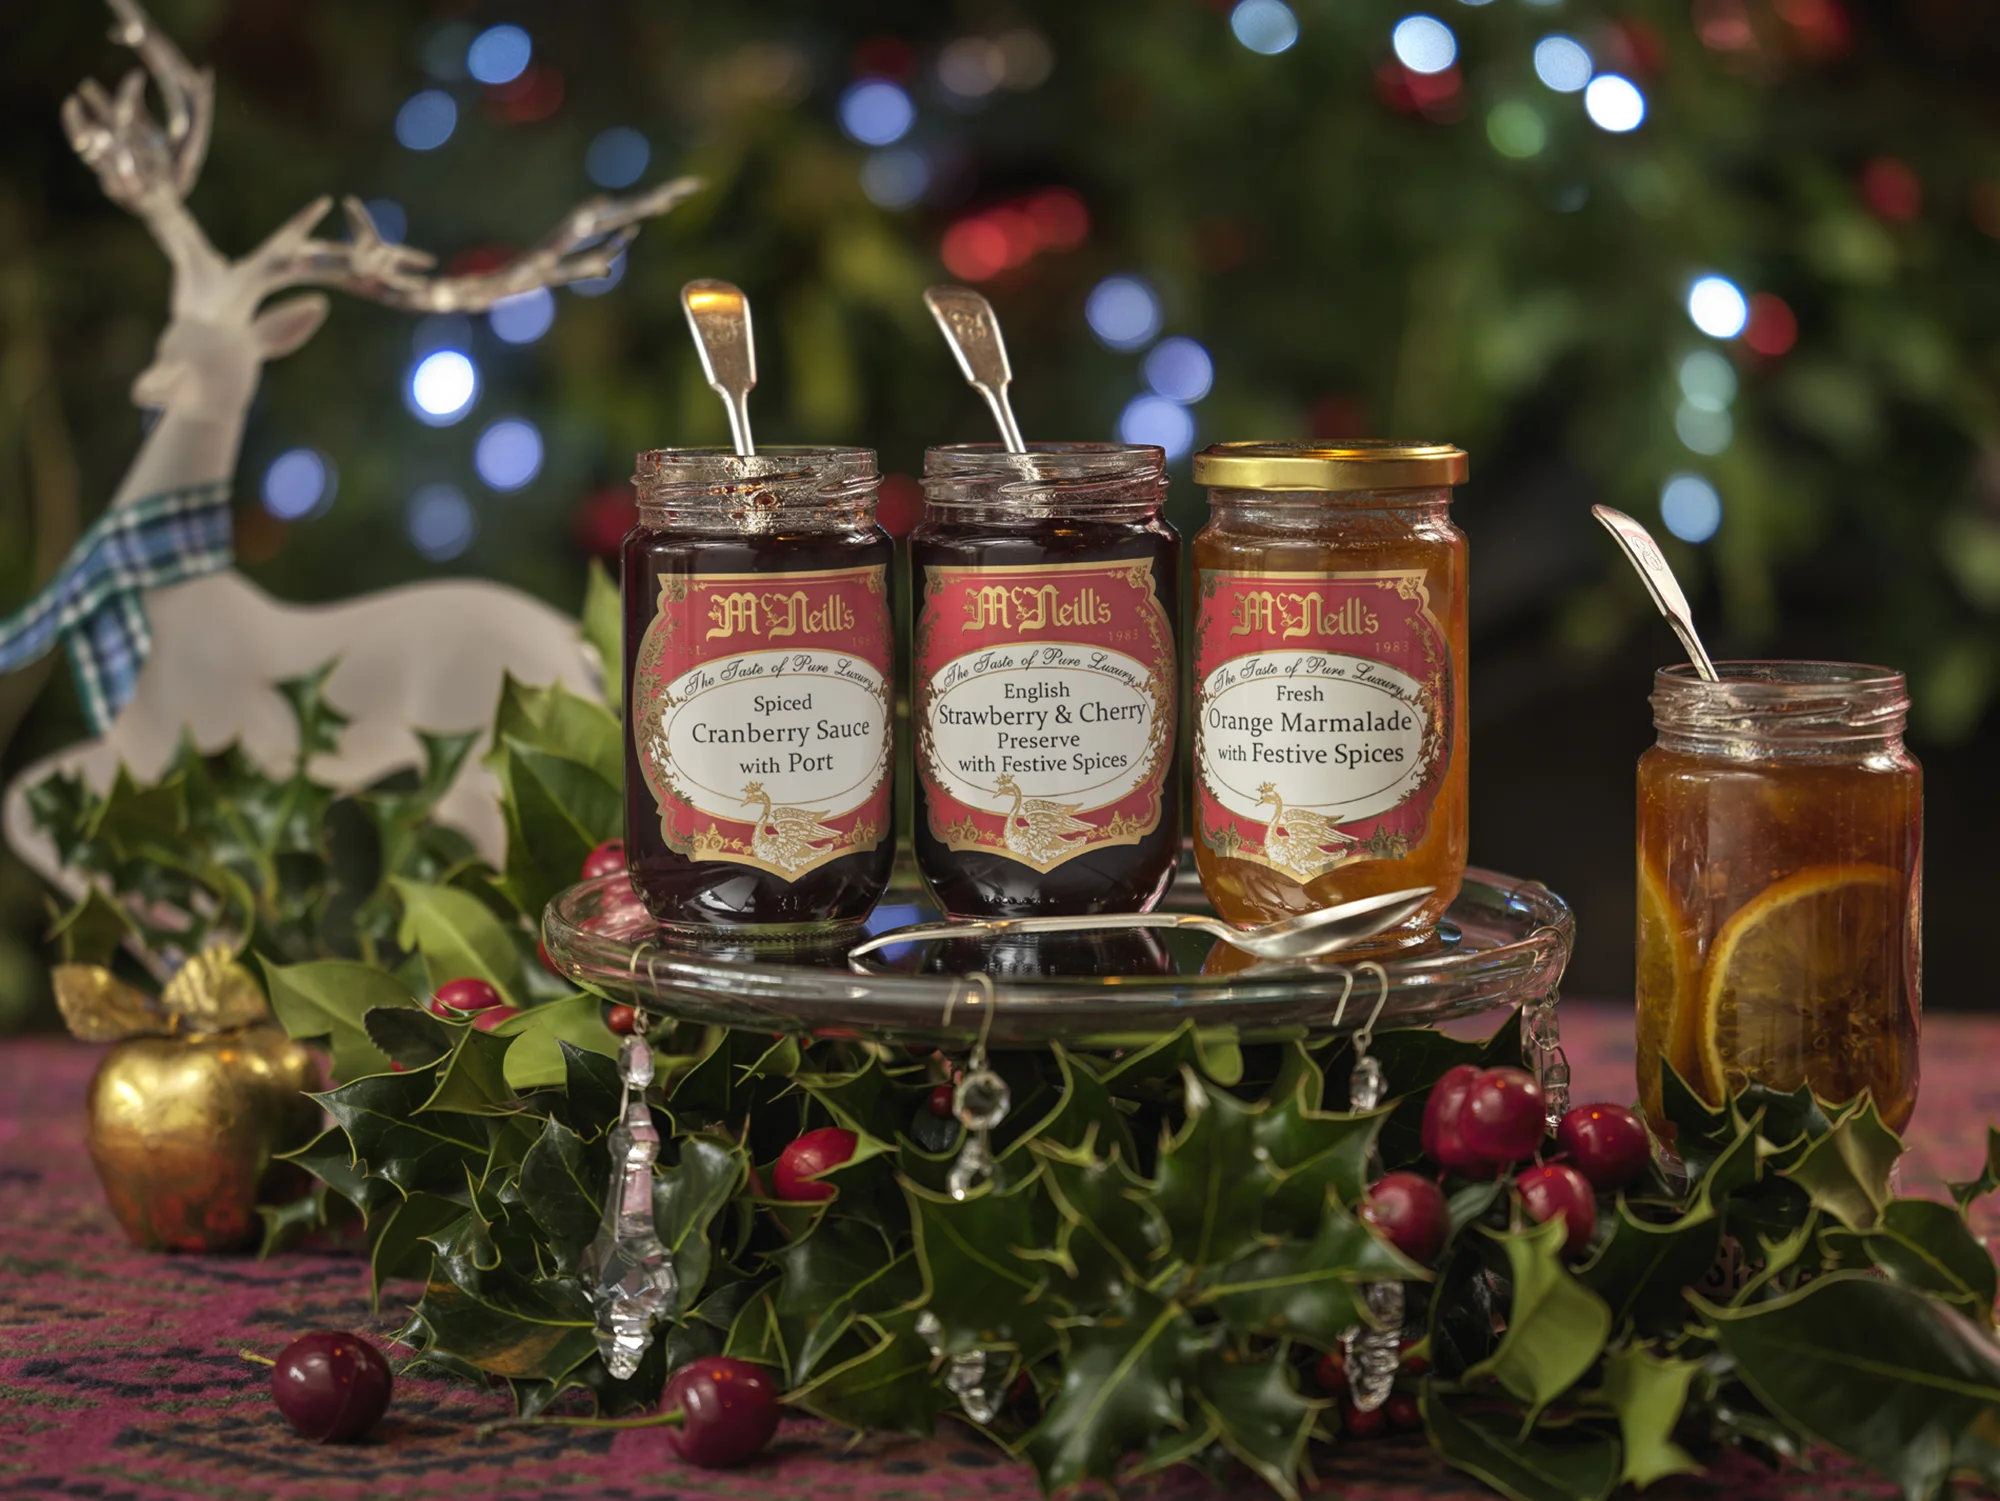 McNeills Christmas collection of jams, sauces and marmalades